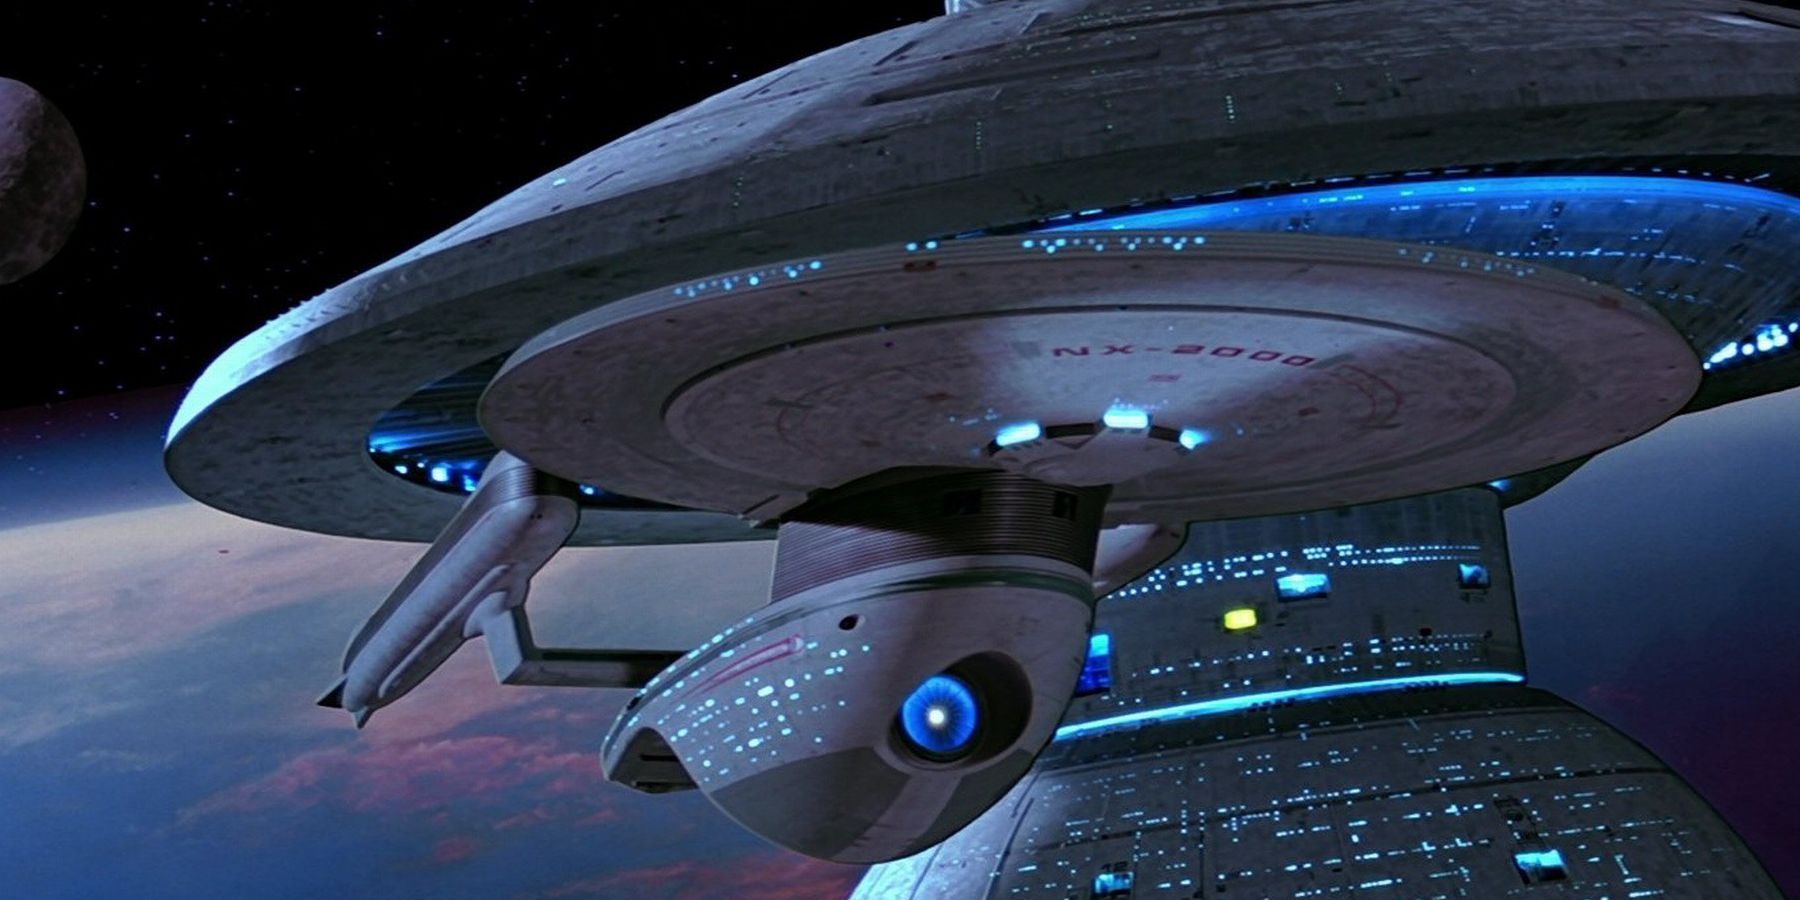 Excelsior leaves Starbase